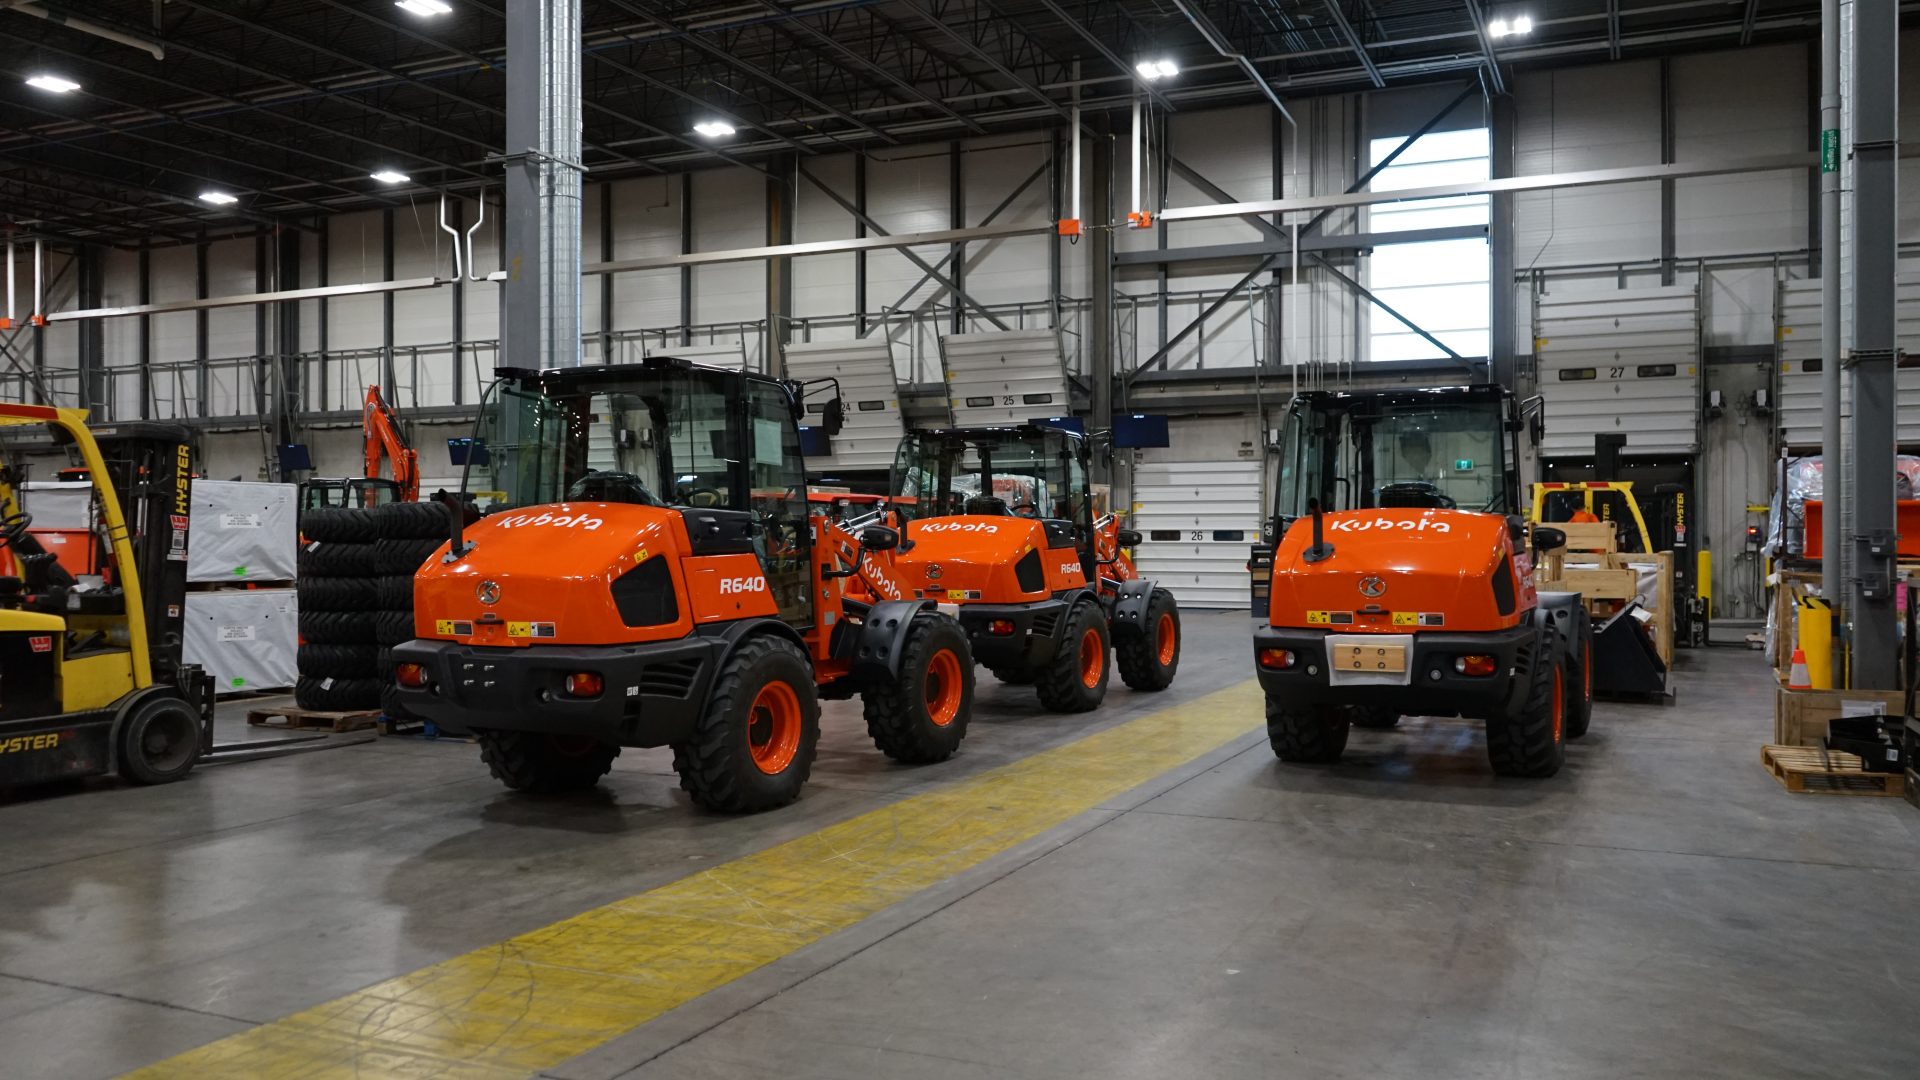 Kubota machines sit parked in a warehouse